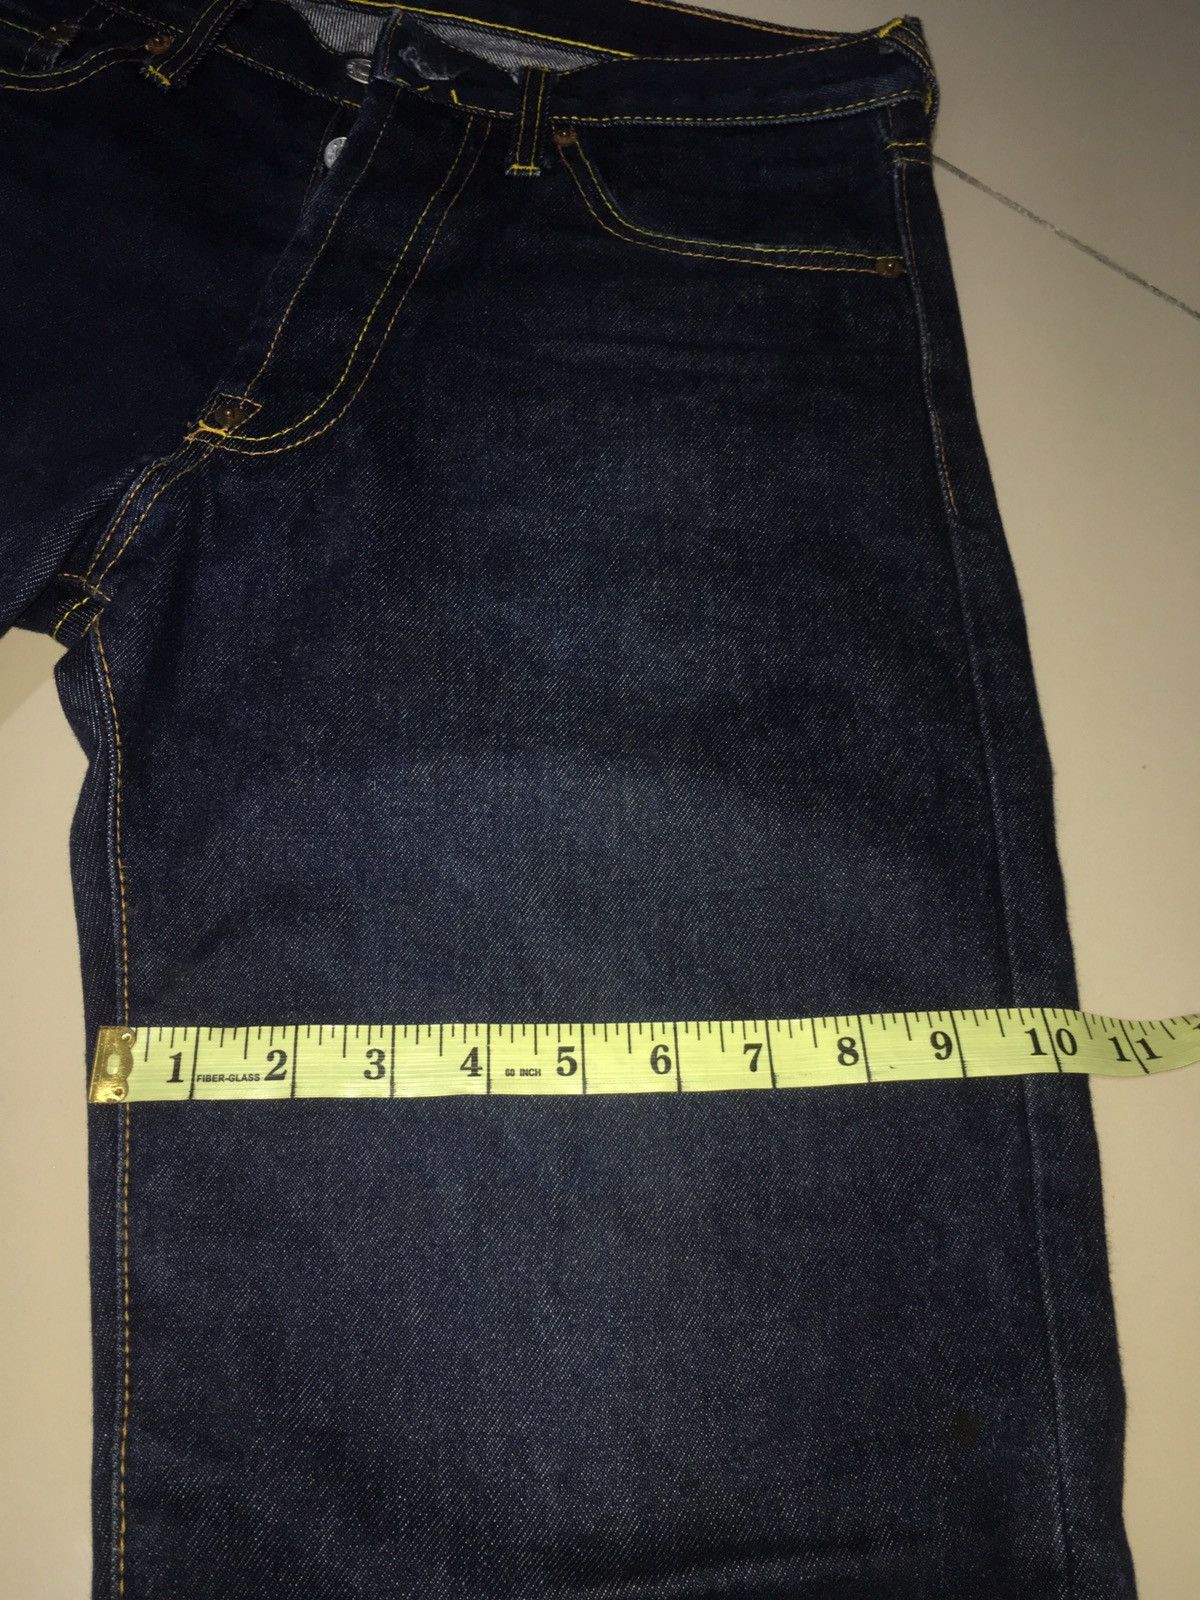 Evisu 🔥LAST DROP PRICE🔥Evisu Genes Osaka Denim Long Pants Size US 32 / EU 48 - 9 Thumbnail